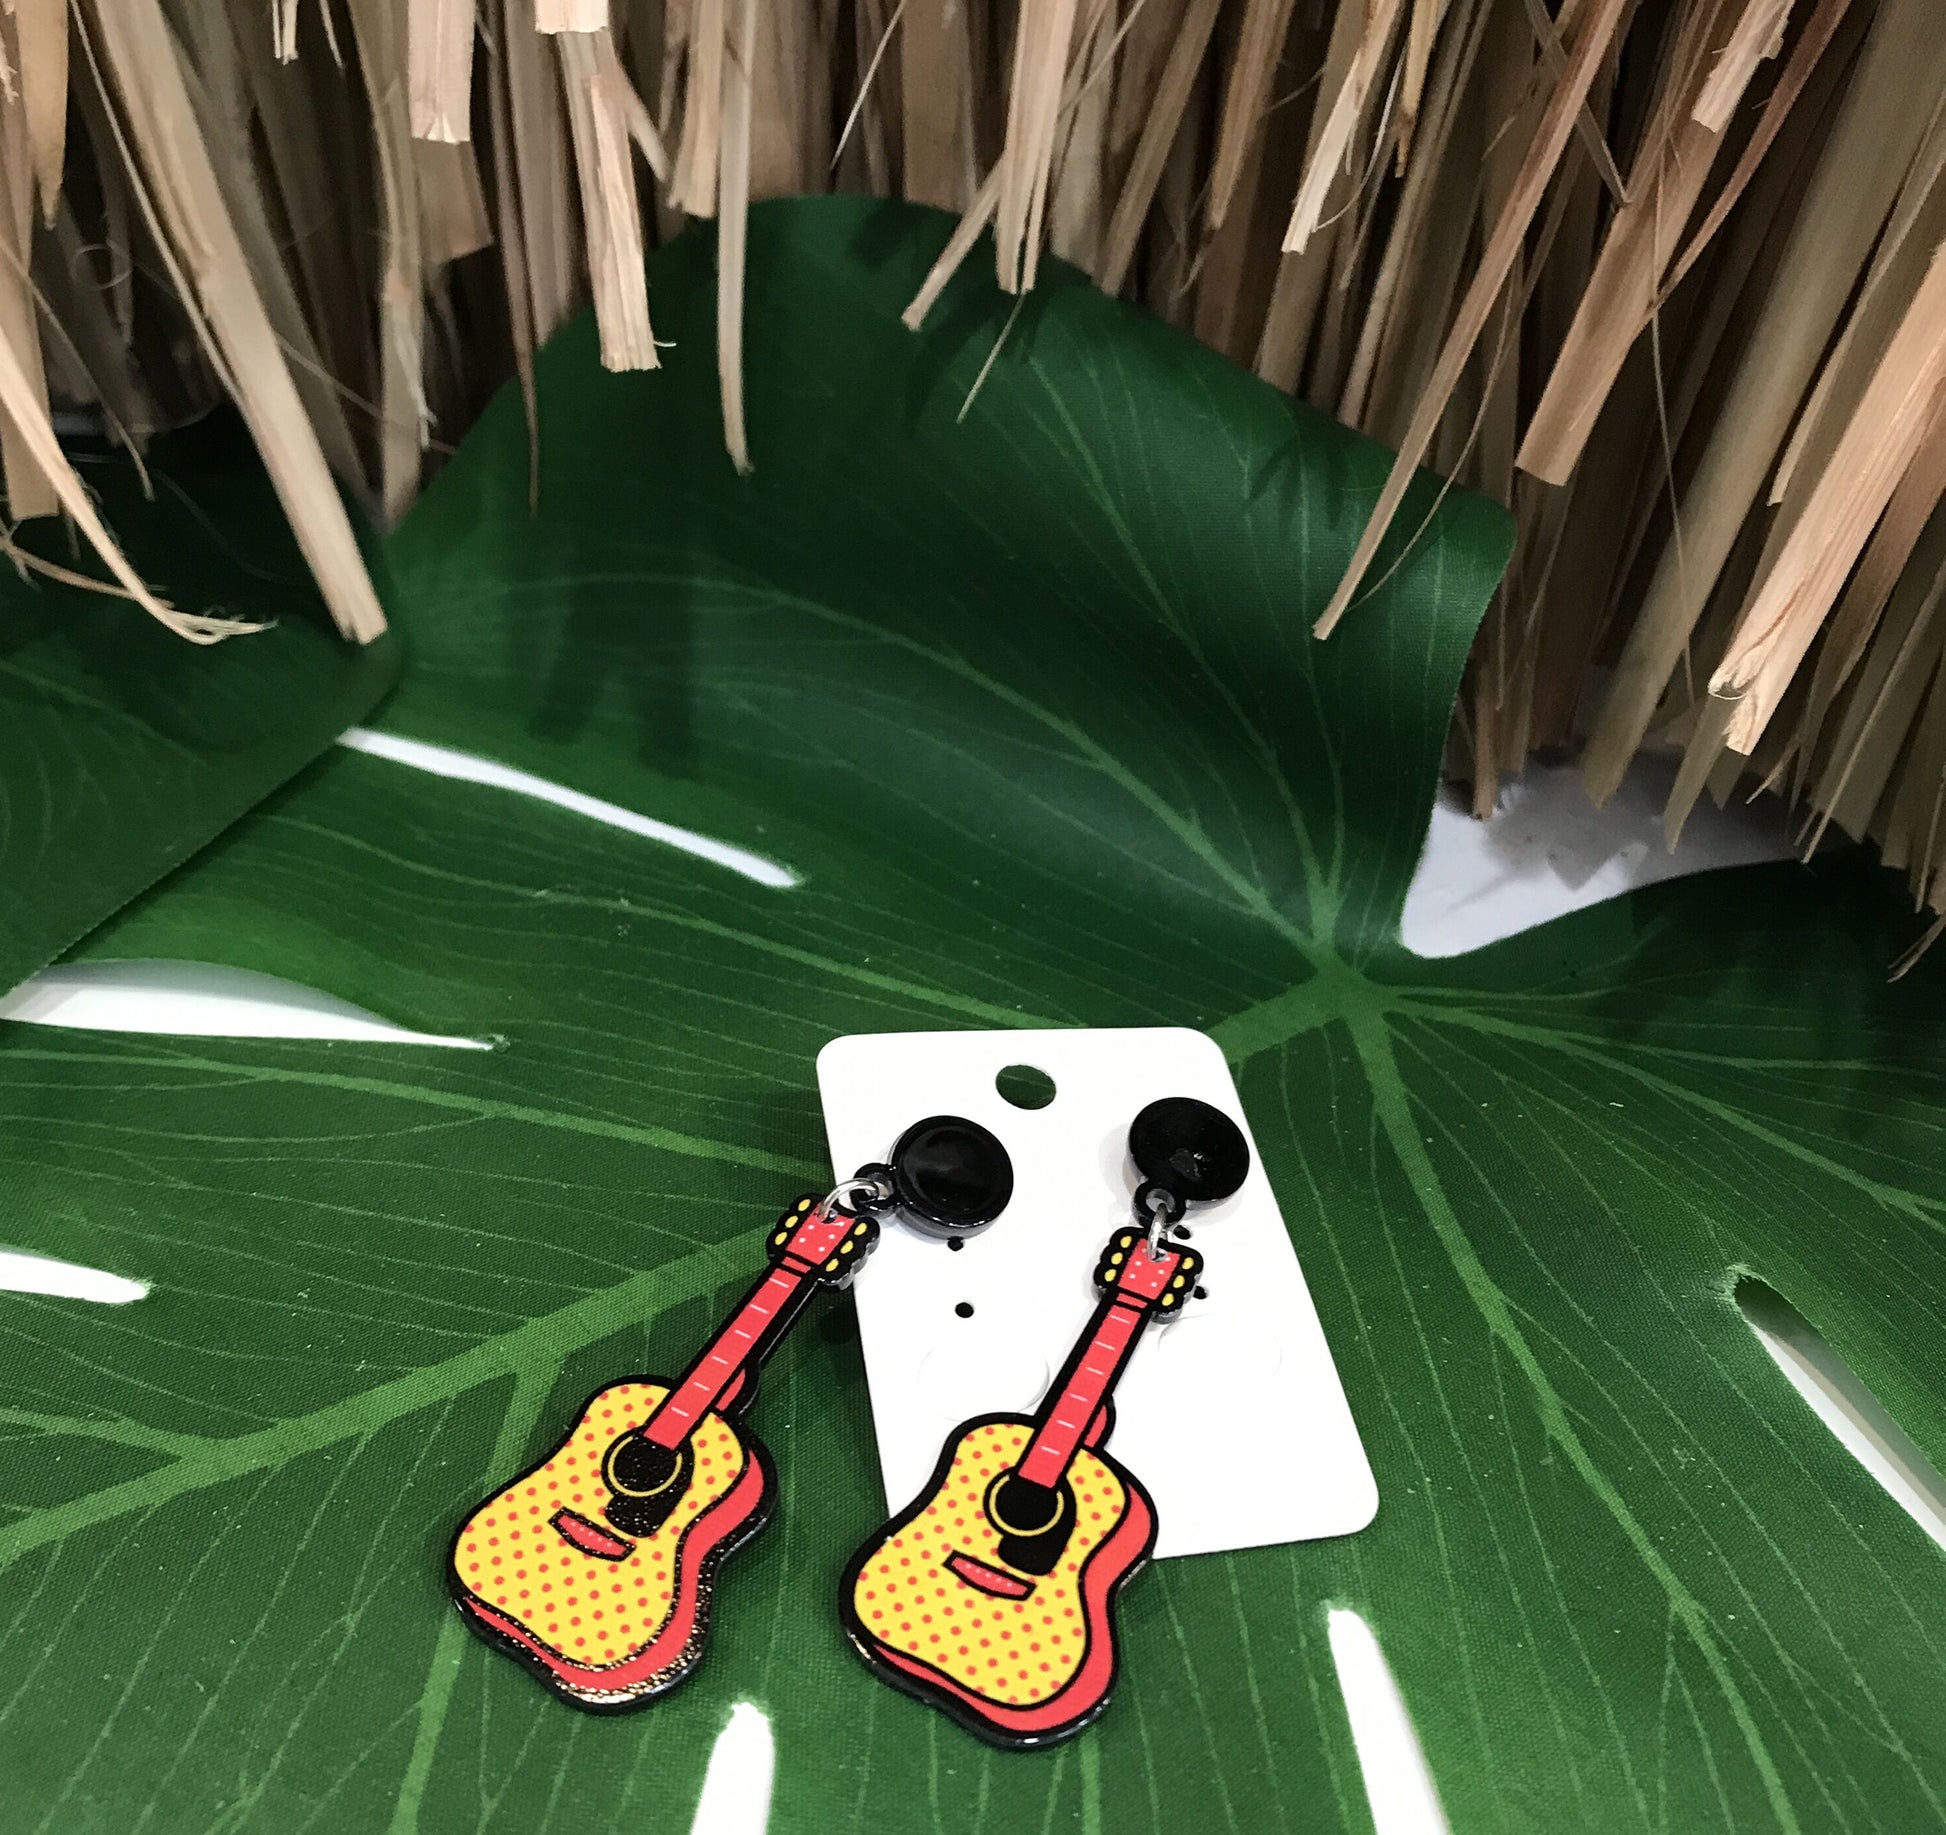 Ukulele Earrings Musical Instrument Earrings for Music Lovers - Kalena Instruments / Guitar